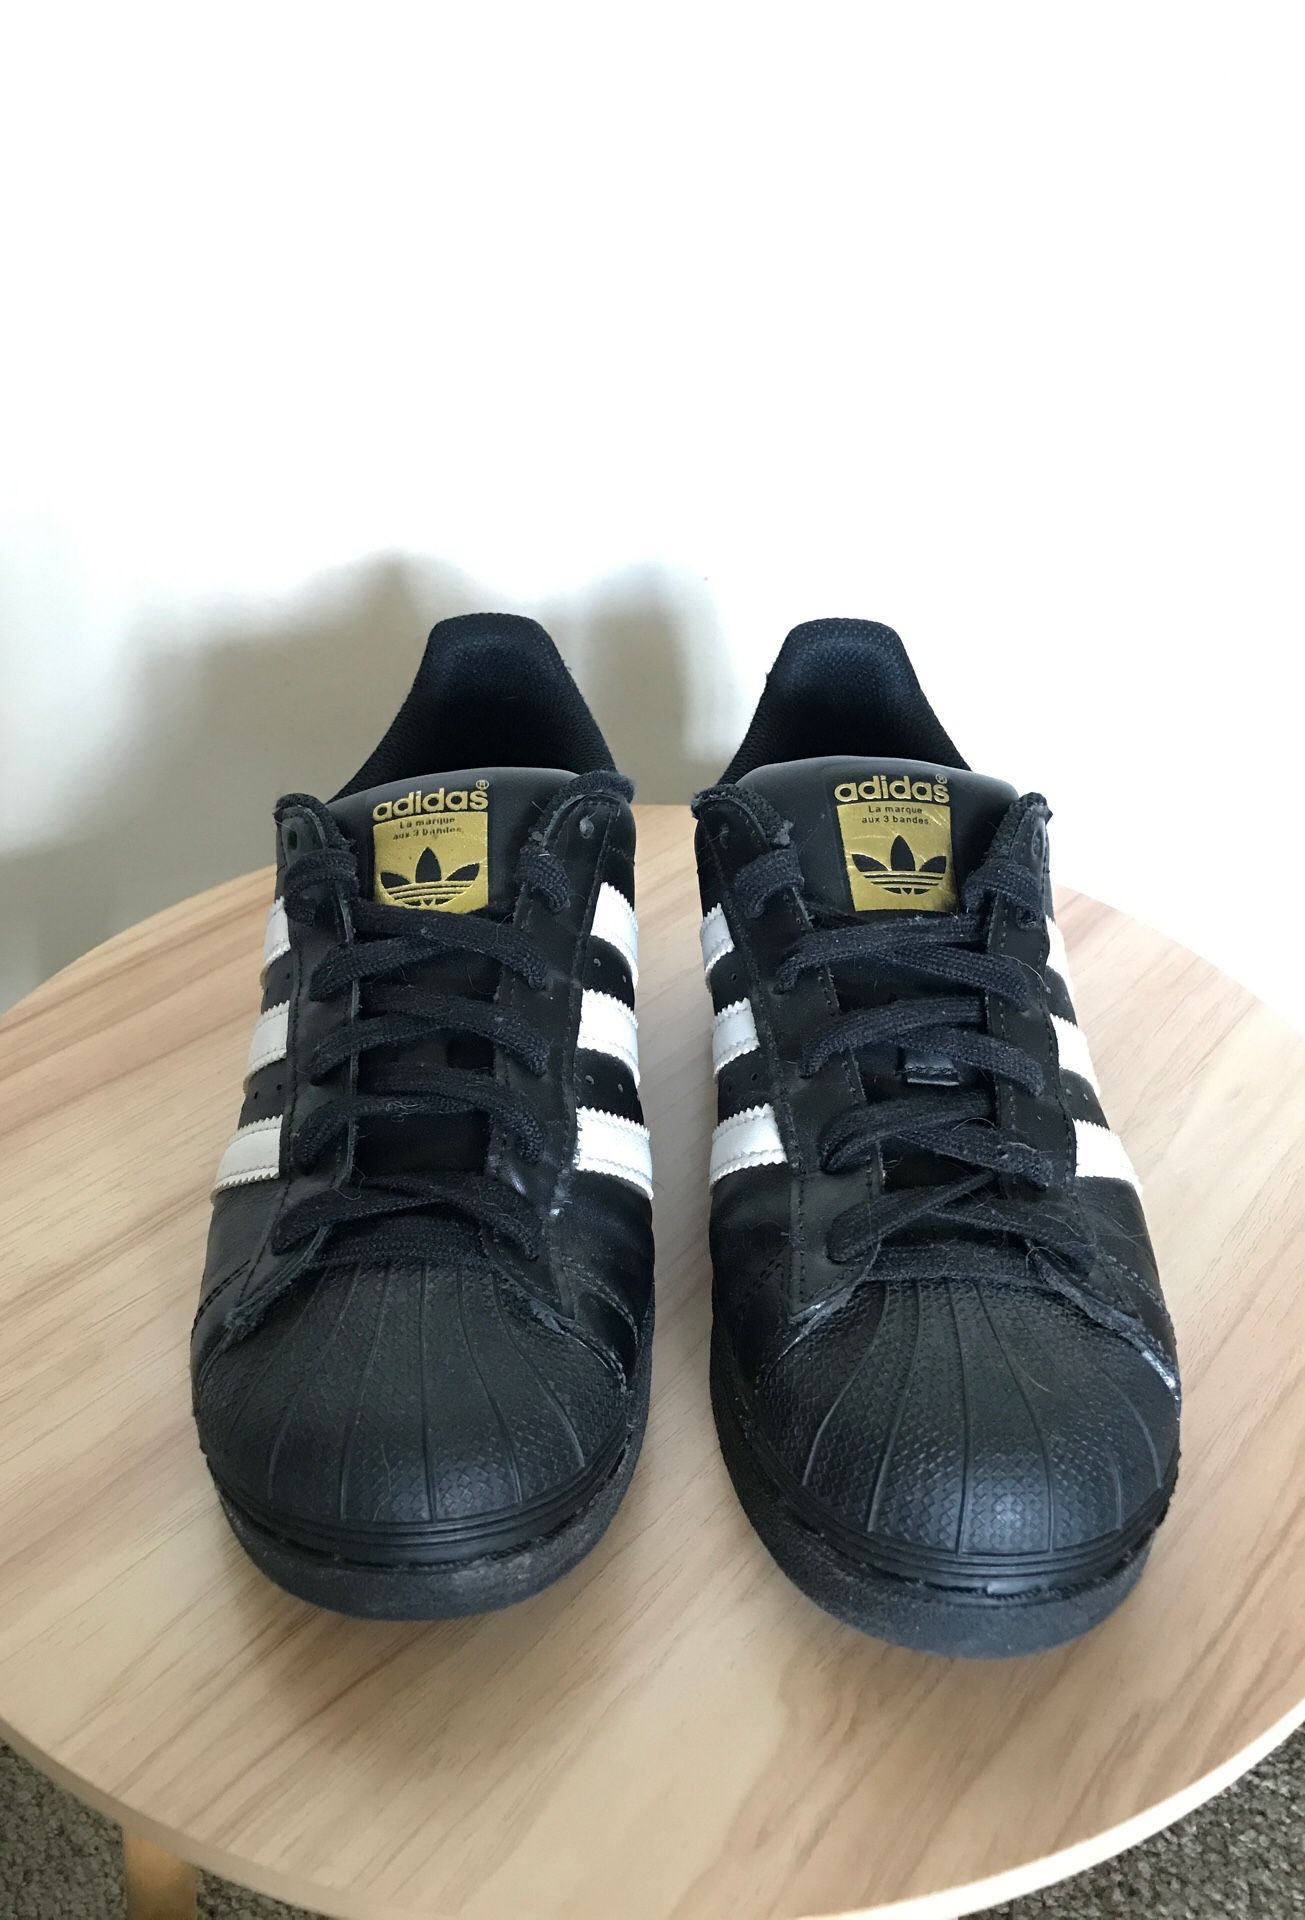 Adidas Superstar Shoes, black